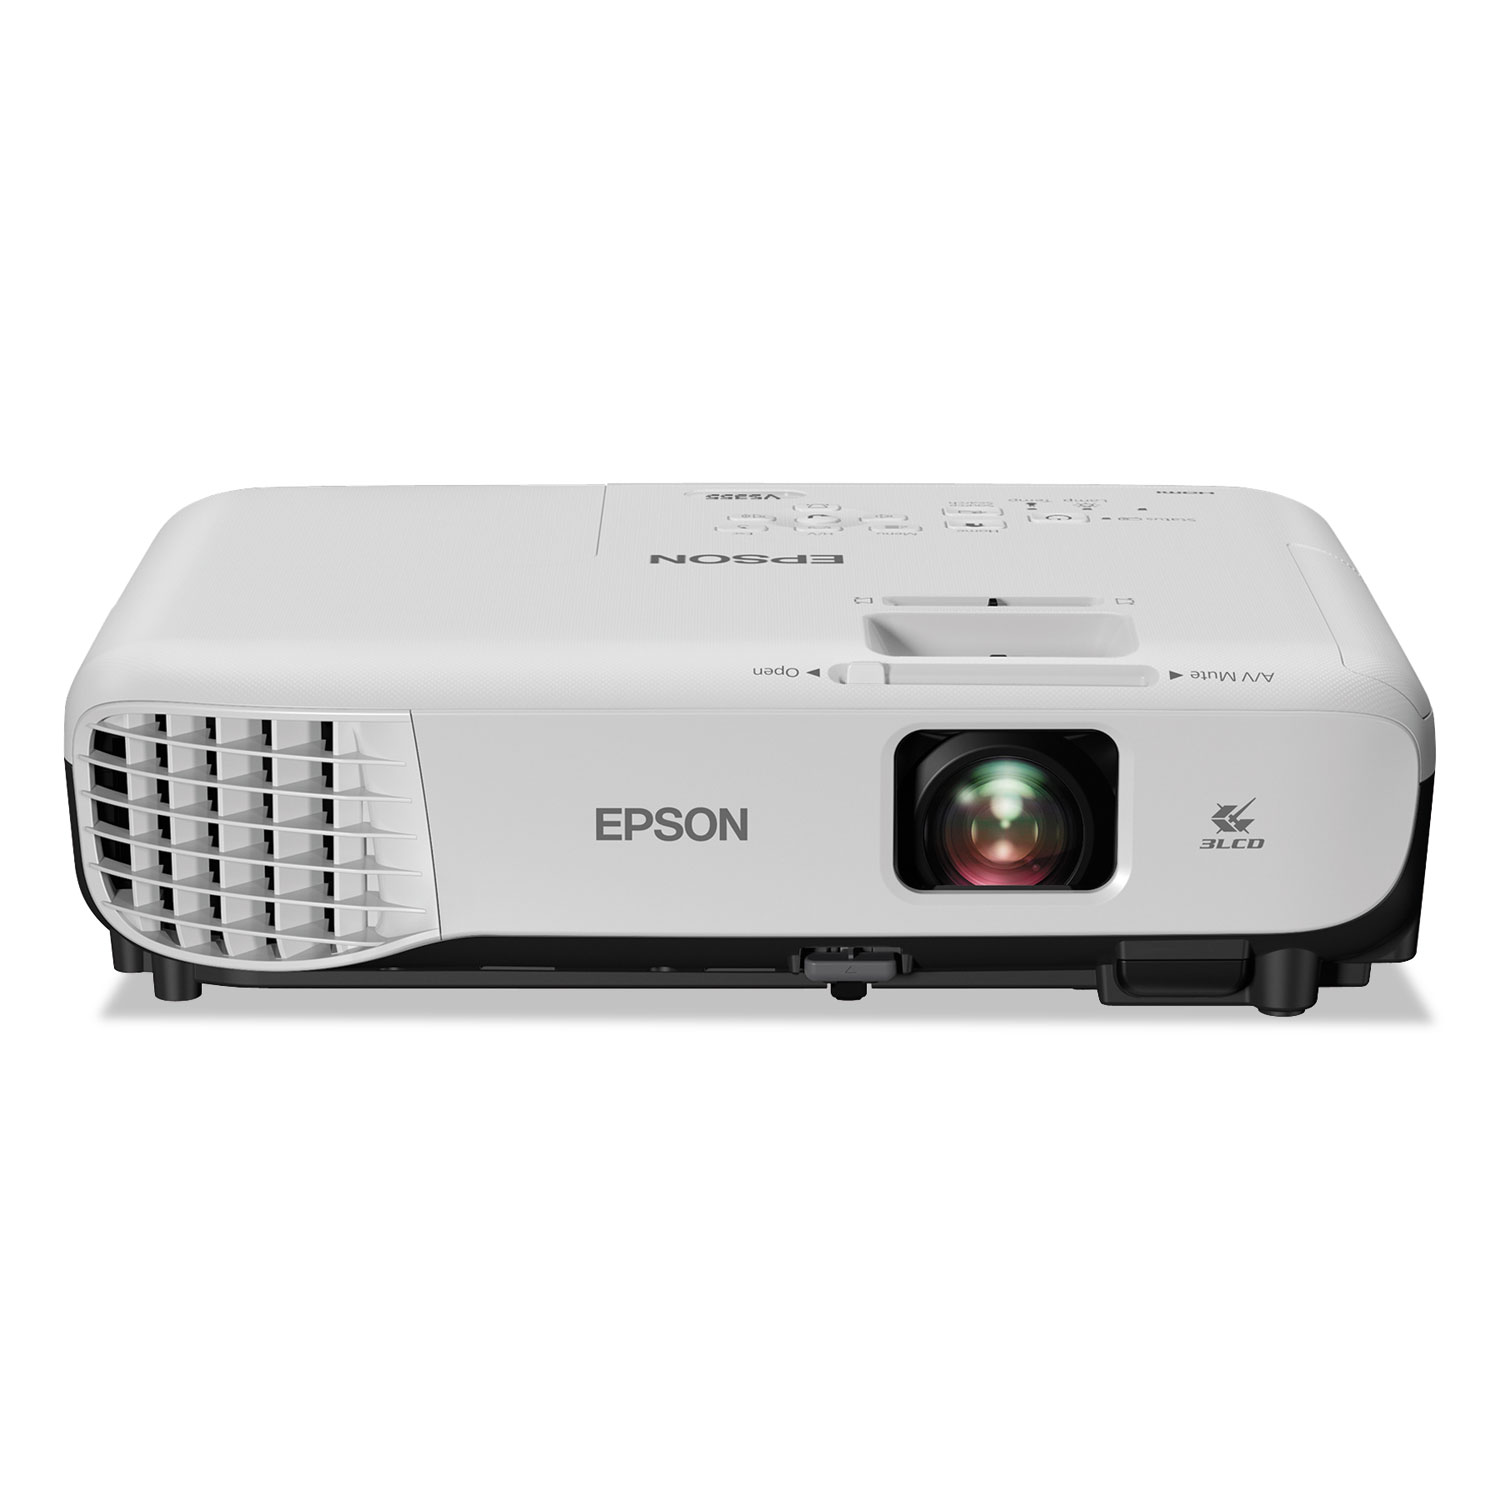  Epson V11H840220 VS355 WXGA 3LCD Projector, 3,300 lm, 1280 x 800 Pixels, 1.2x Zoom (EPSV11H840220) 